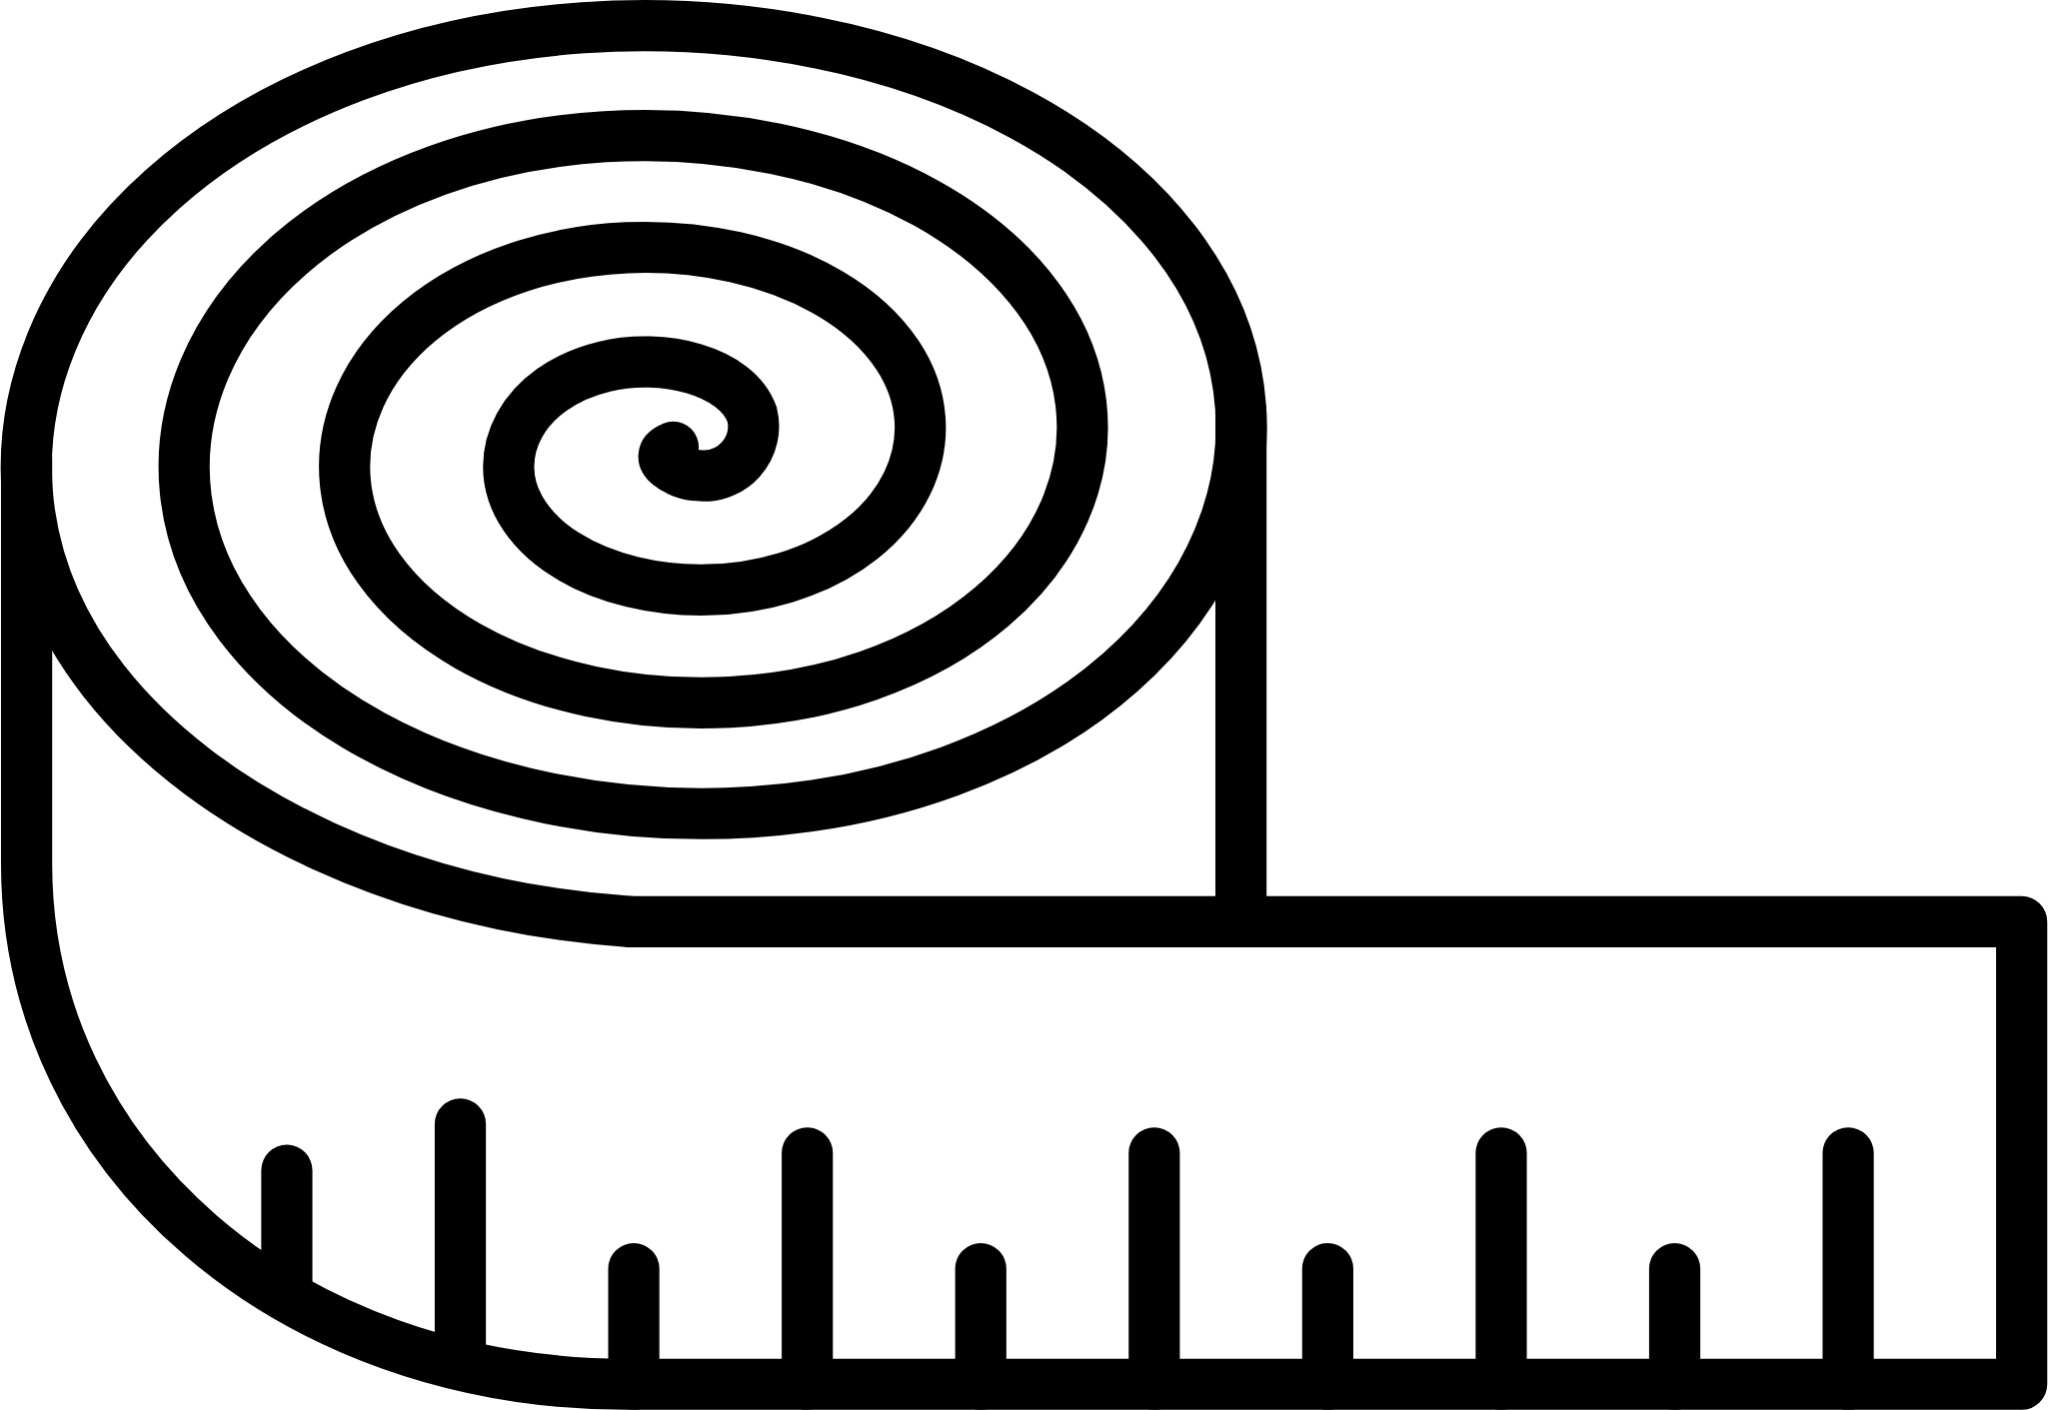 tapemeasure icon